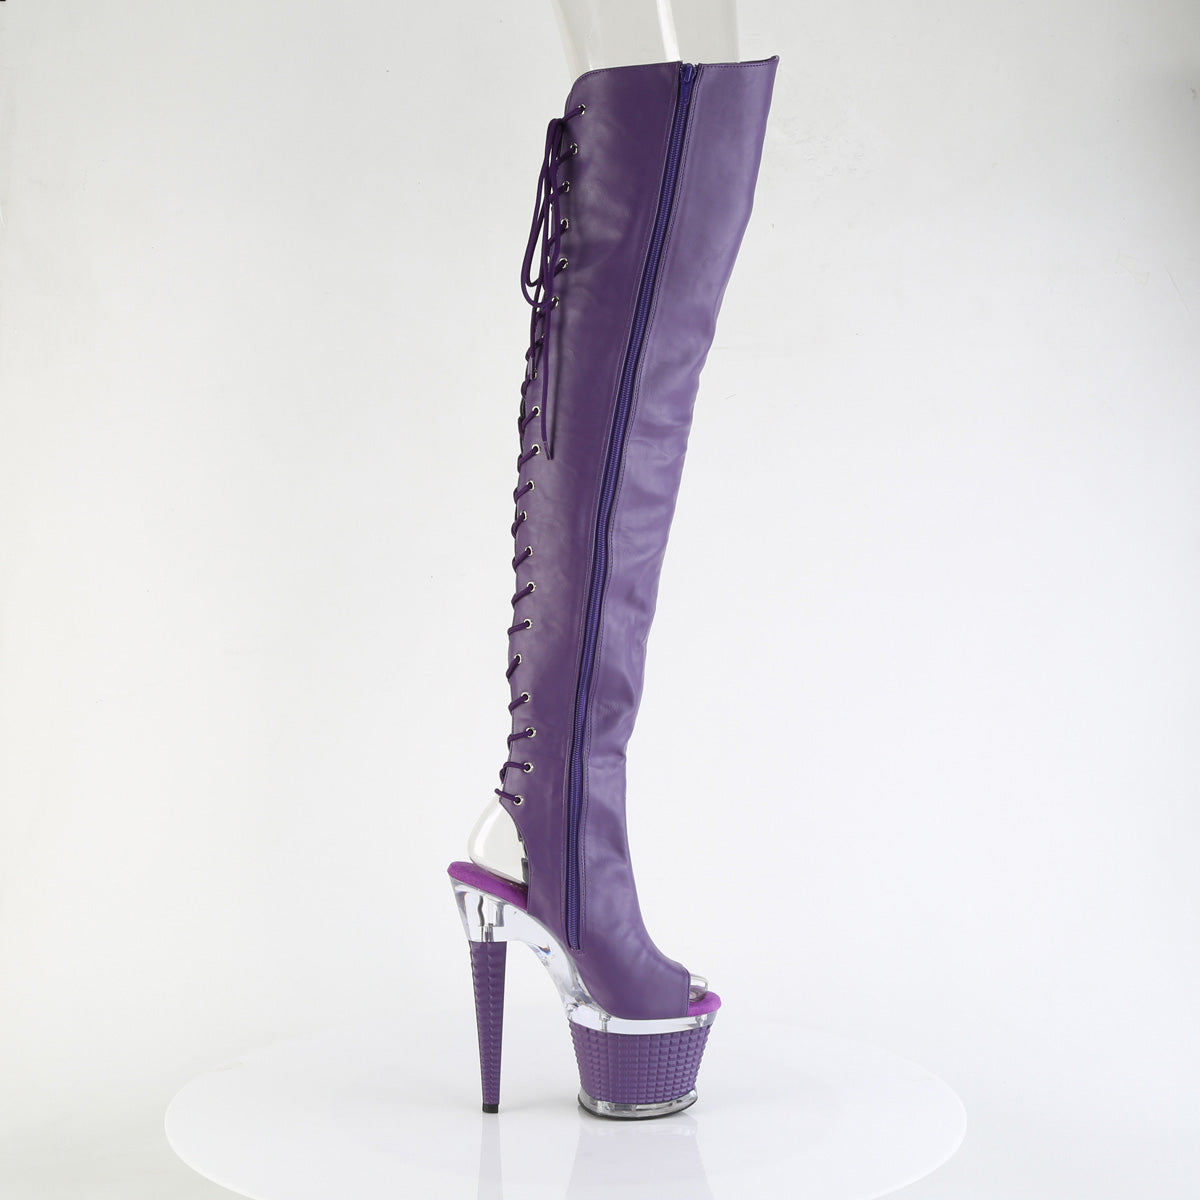 SPECTATOR-3030 Purple Pleaser Pole Dancing Thigh High Boots.